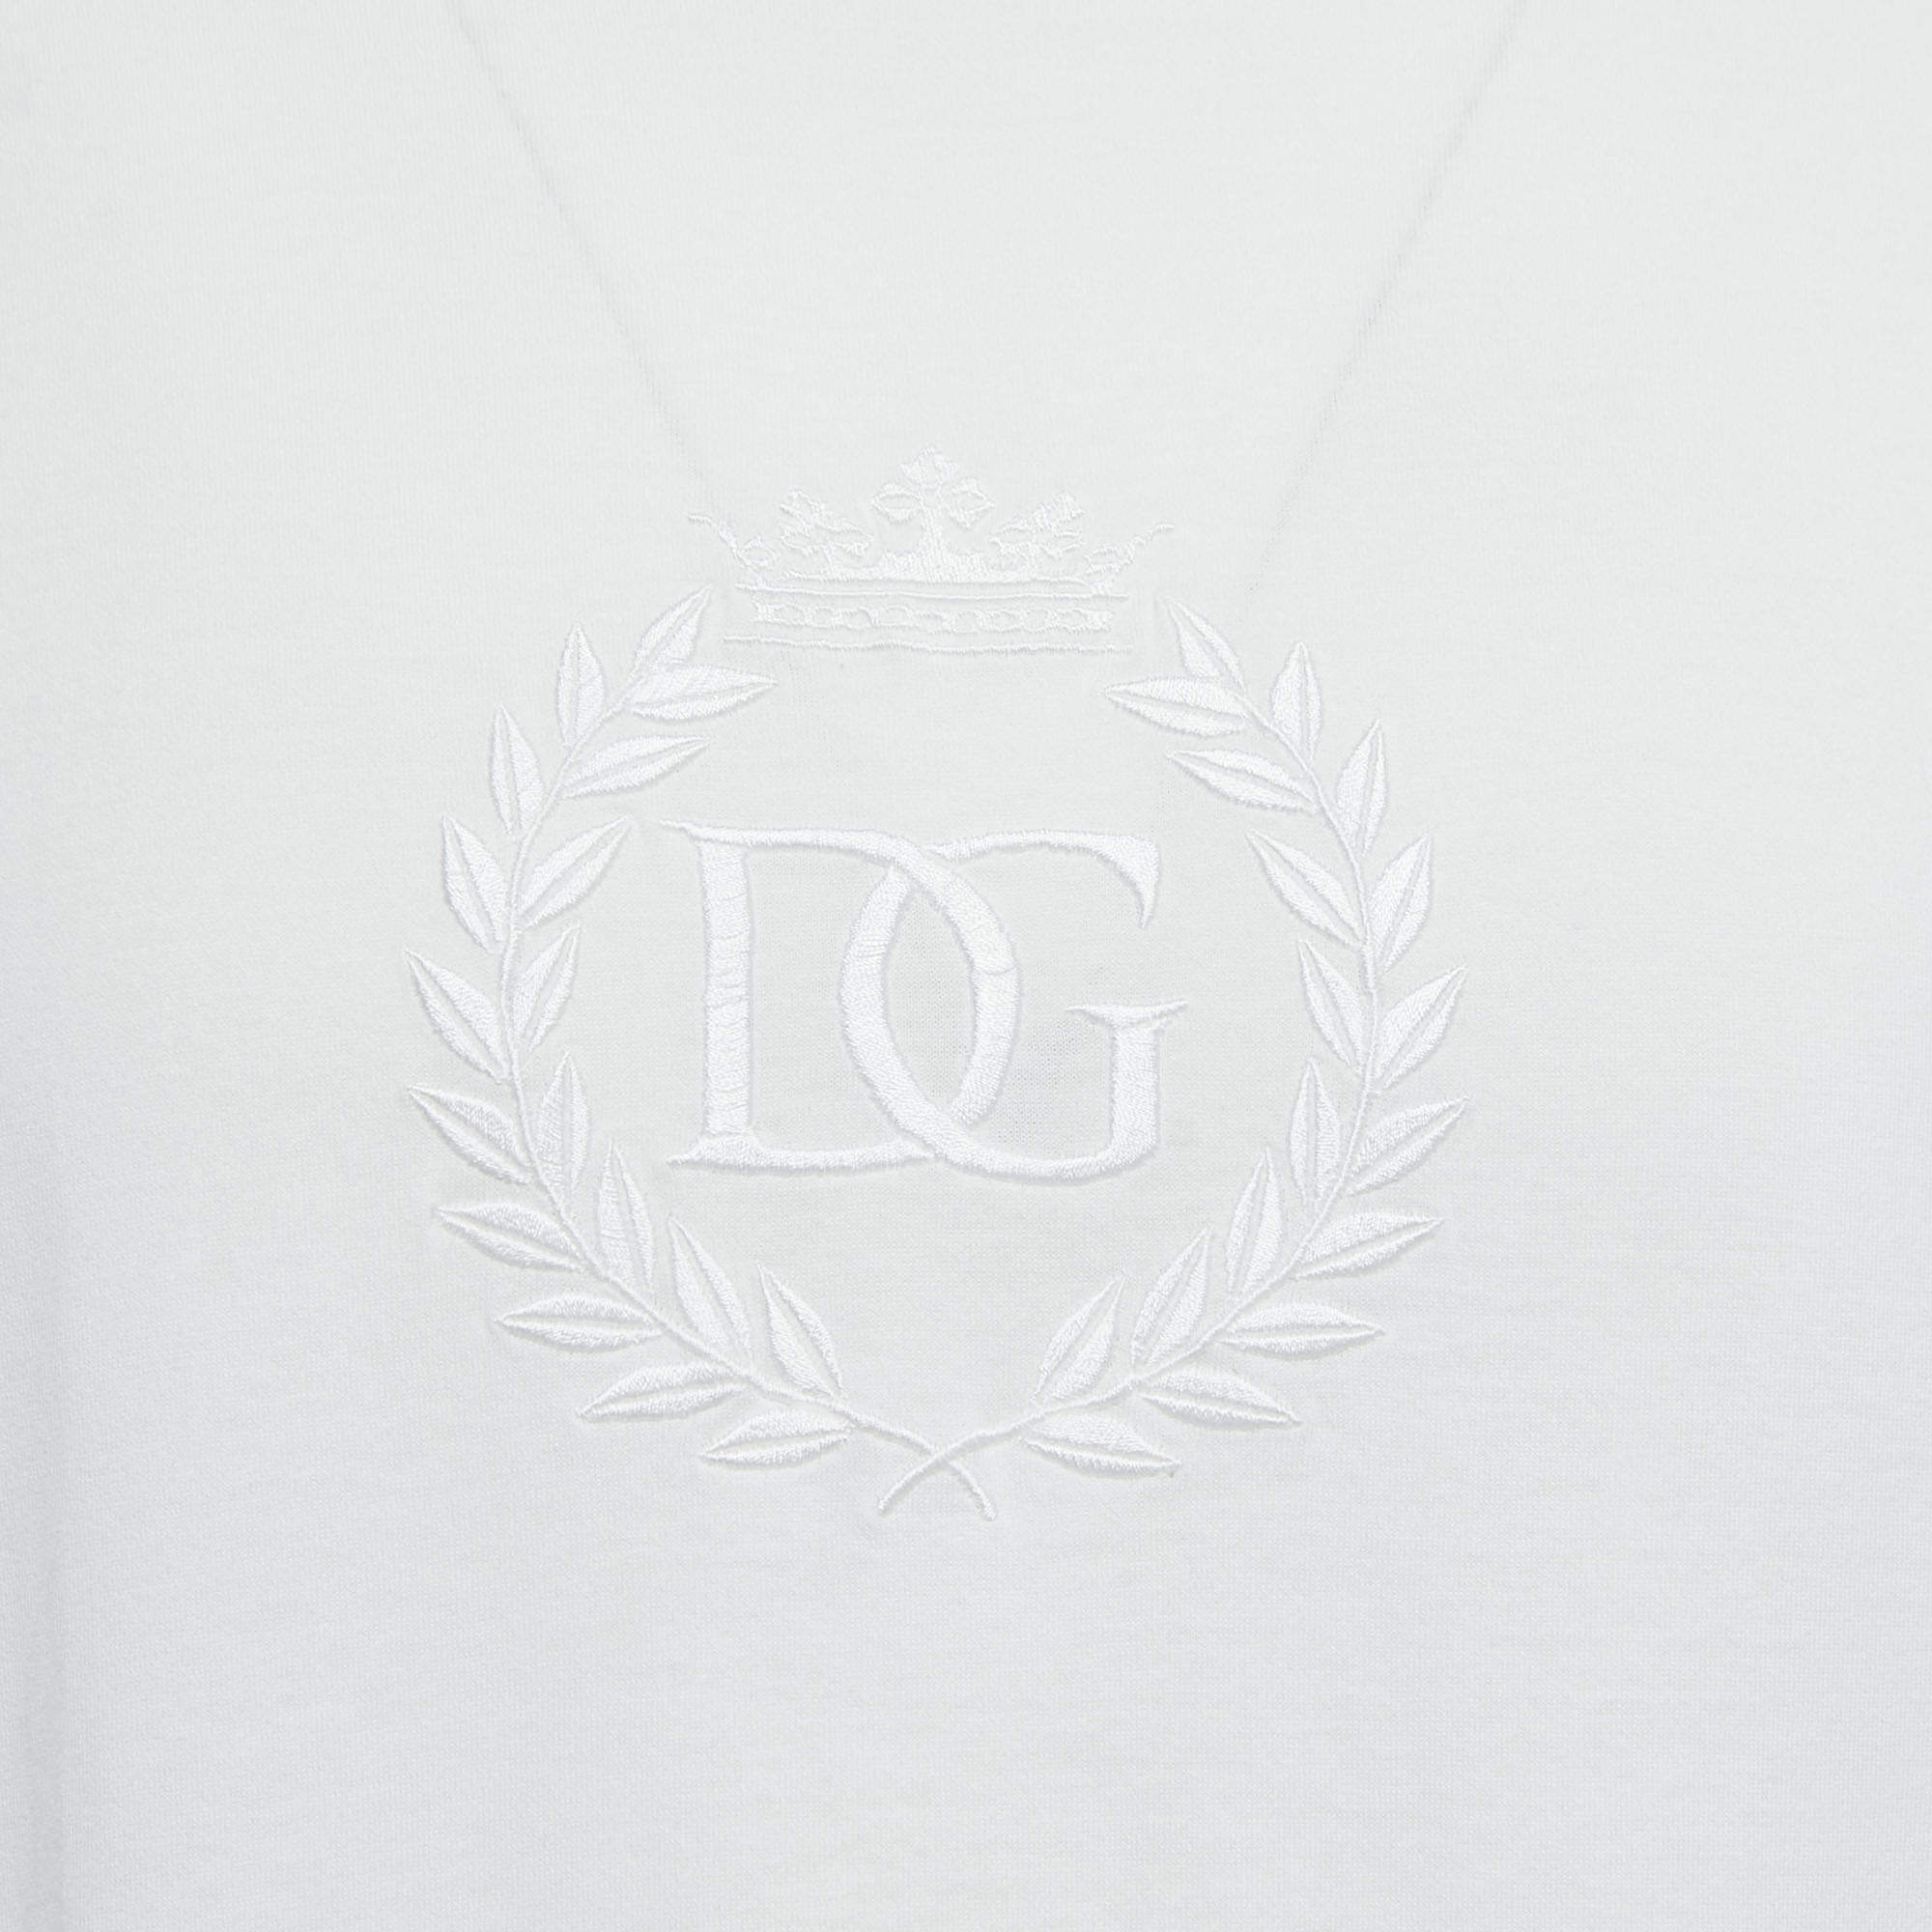 Dolce & Gabbana White Logo Embroidered Cotton Crew Neck Half